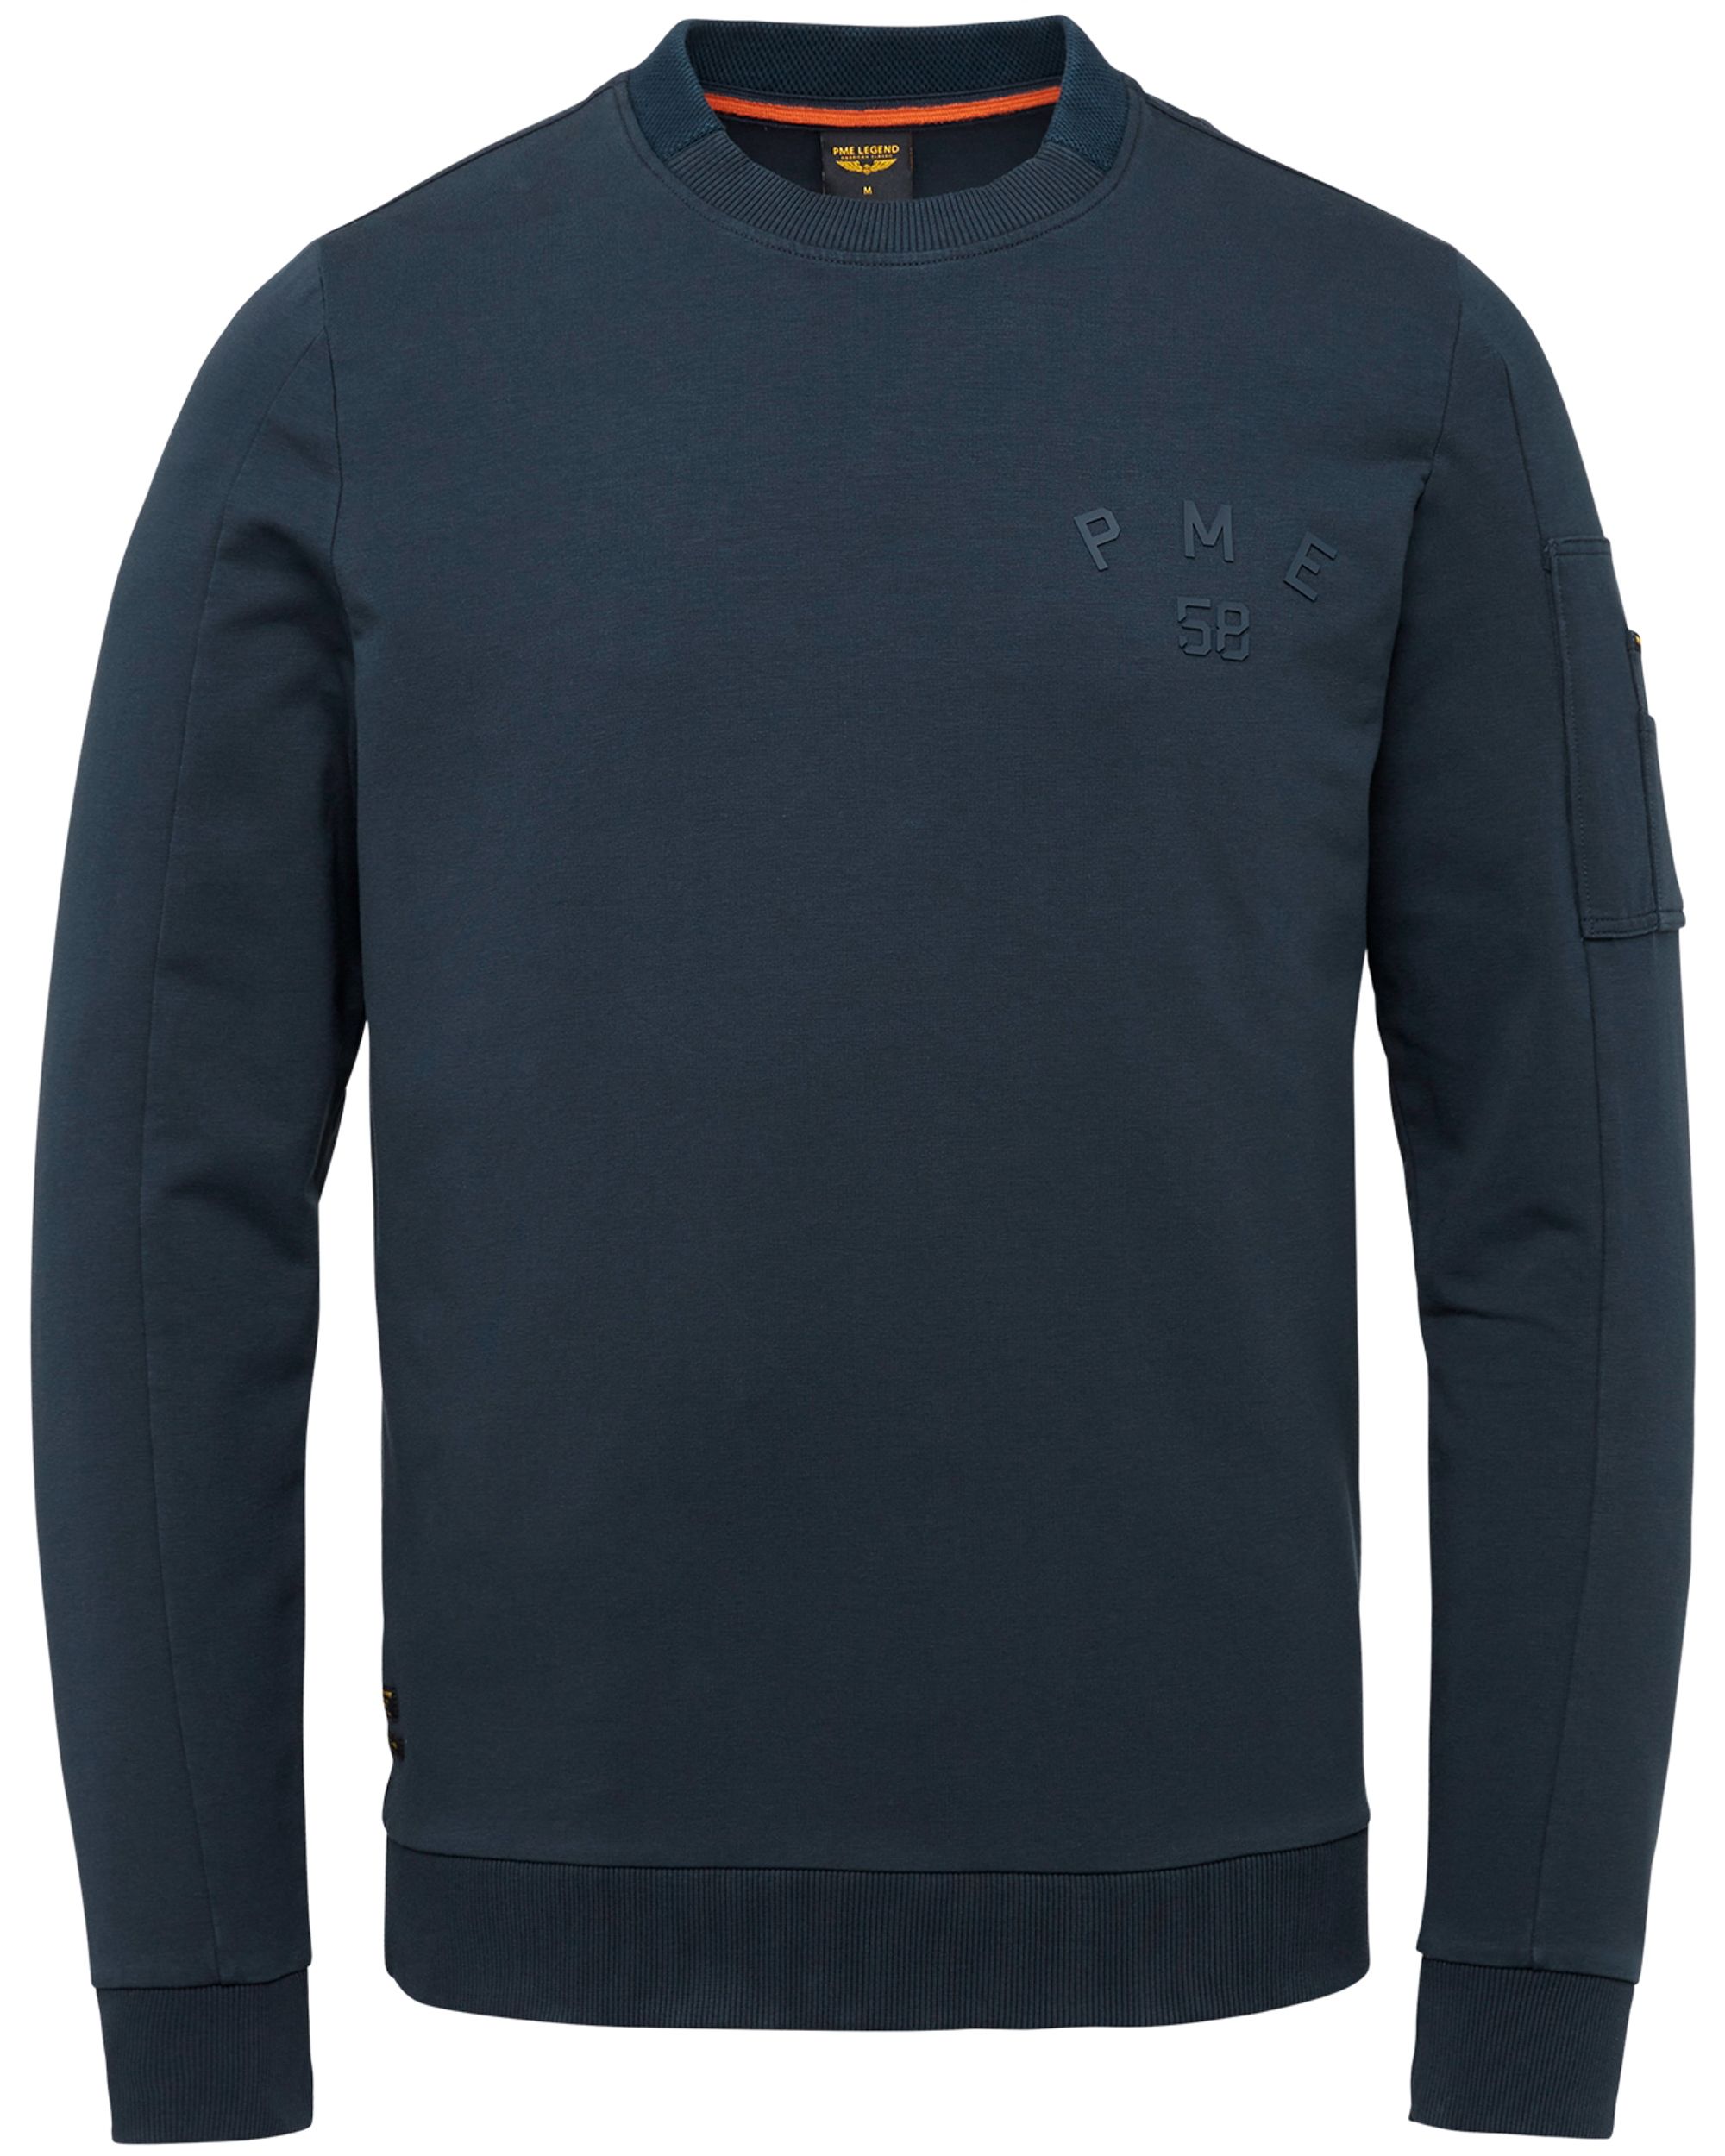 PME Legend Sweater Blauw 081382-001-L